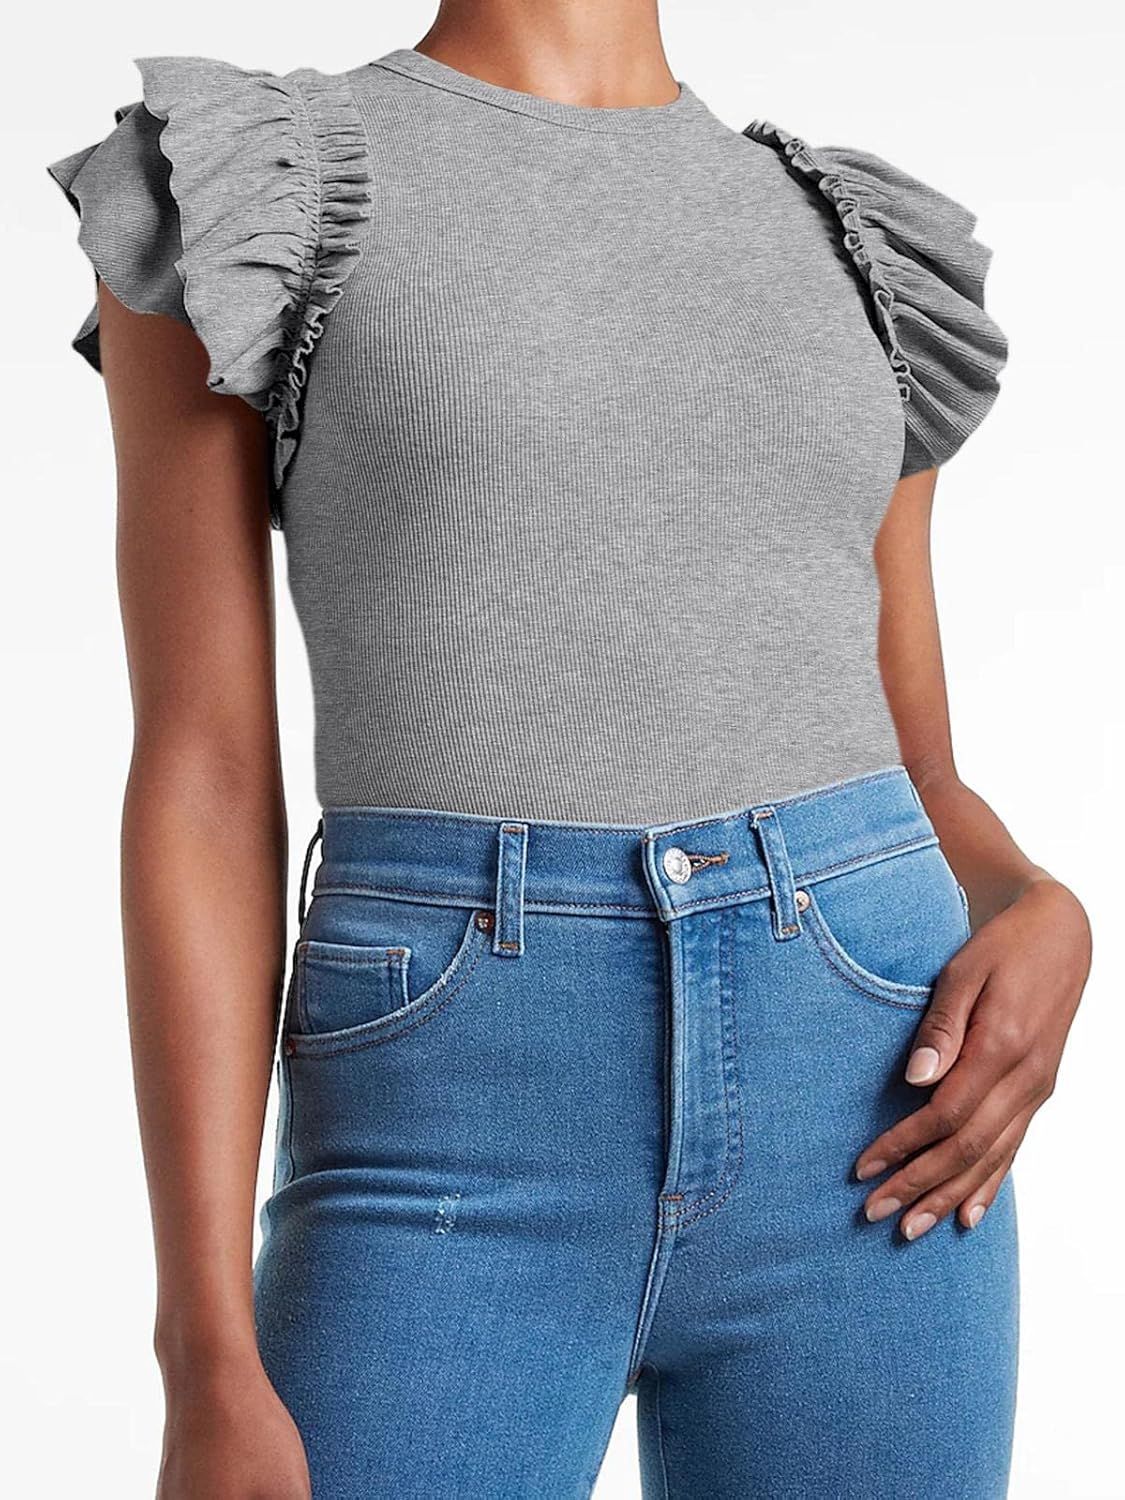 Womens Ruffle Short Sleeve Shirts Slim Fit High Neck Knit Ribbed Tops | Amazon (US)